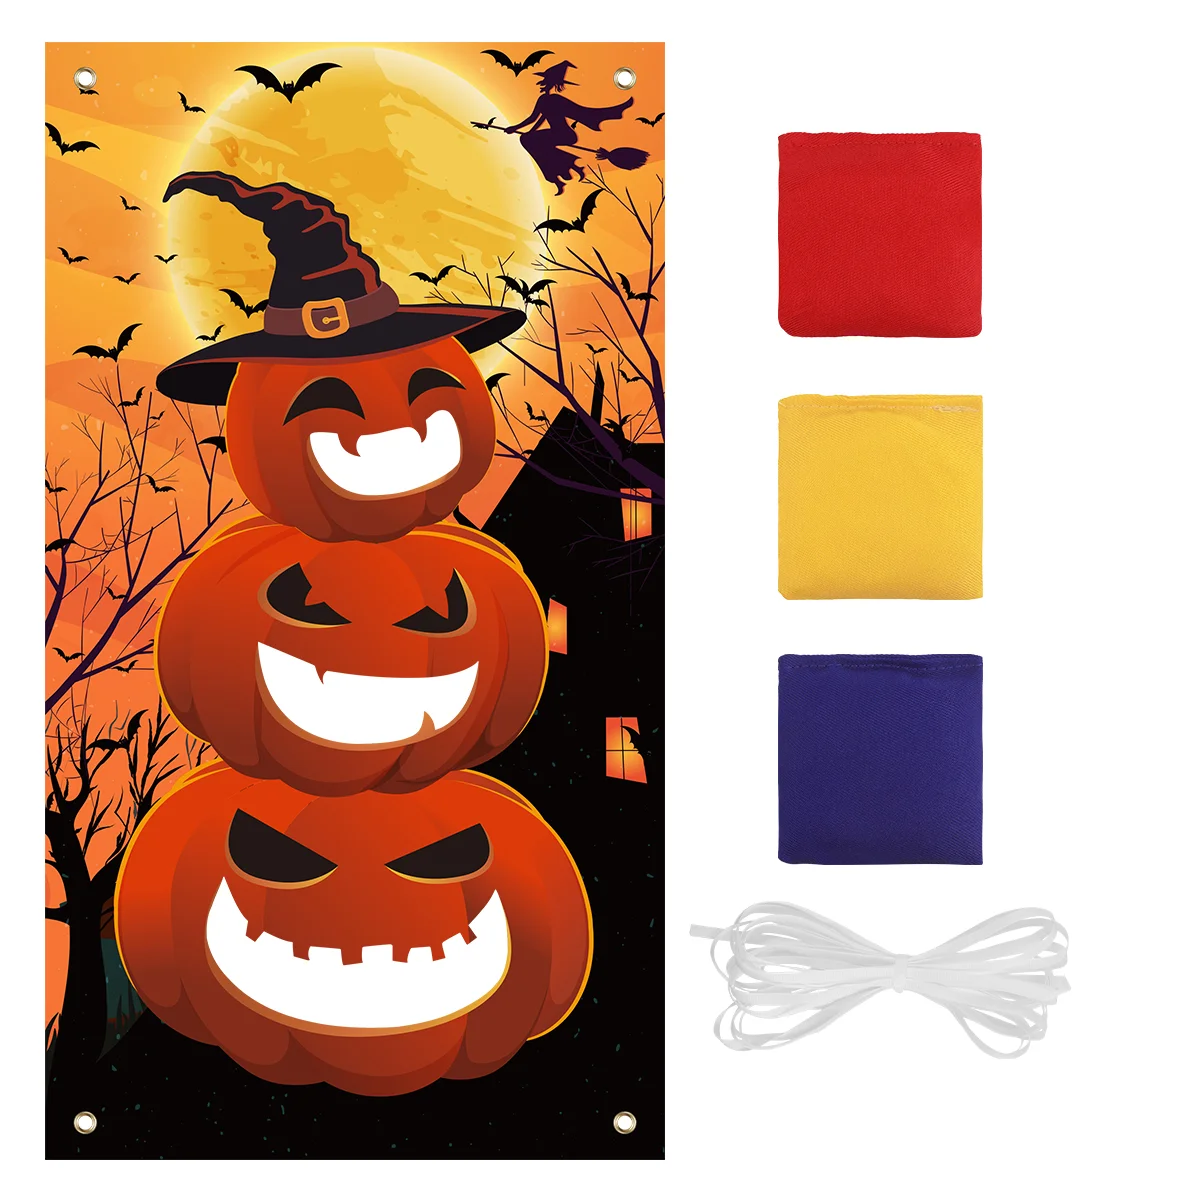 

Halloween Pumpkin Bean Bag Toss Game Outdoor Throwing Decorations Party Favors Banner Bags Kids